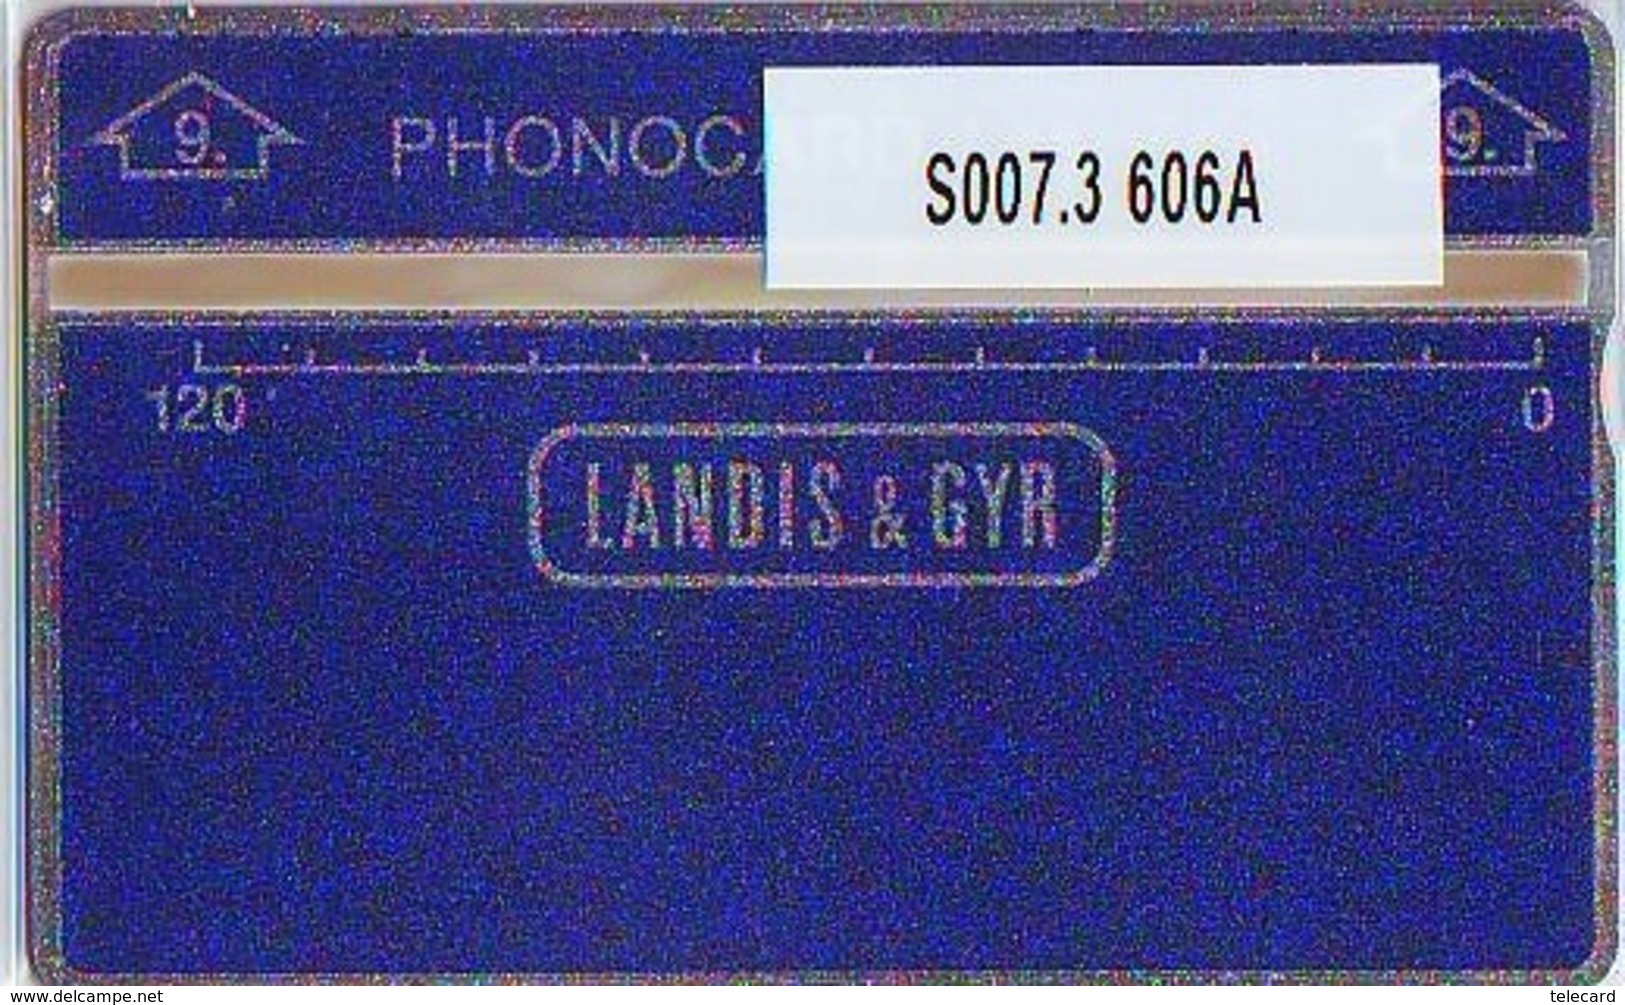 NEDERLAND LANDIS&GYR * SODECO * SERVICE CARD NR S007.3  606A  "9" ONGEBRUIKT *  MINT - Test & Dienst